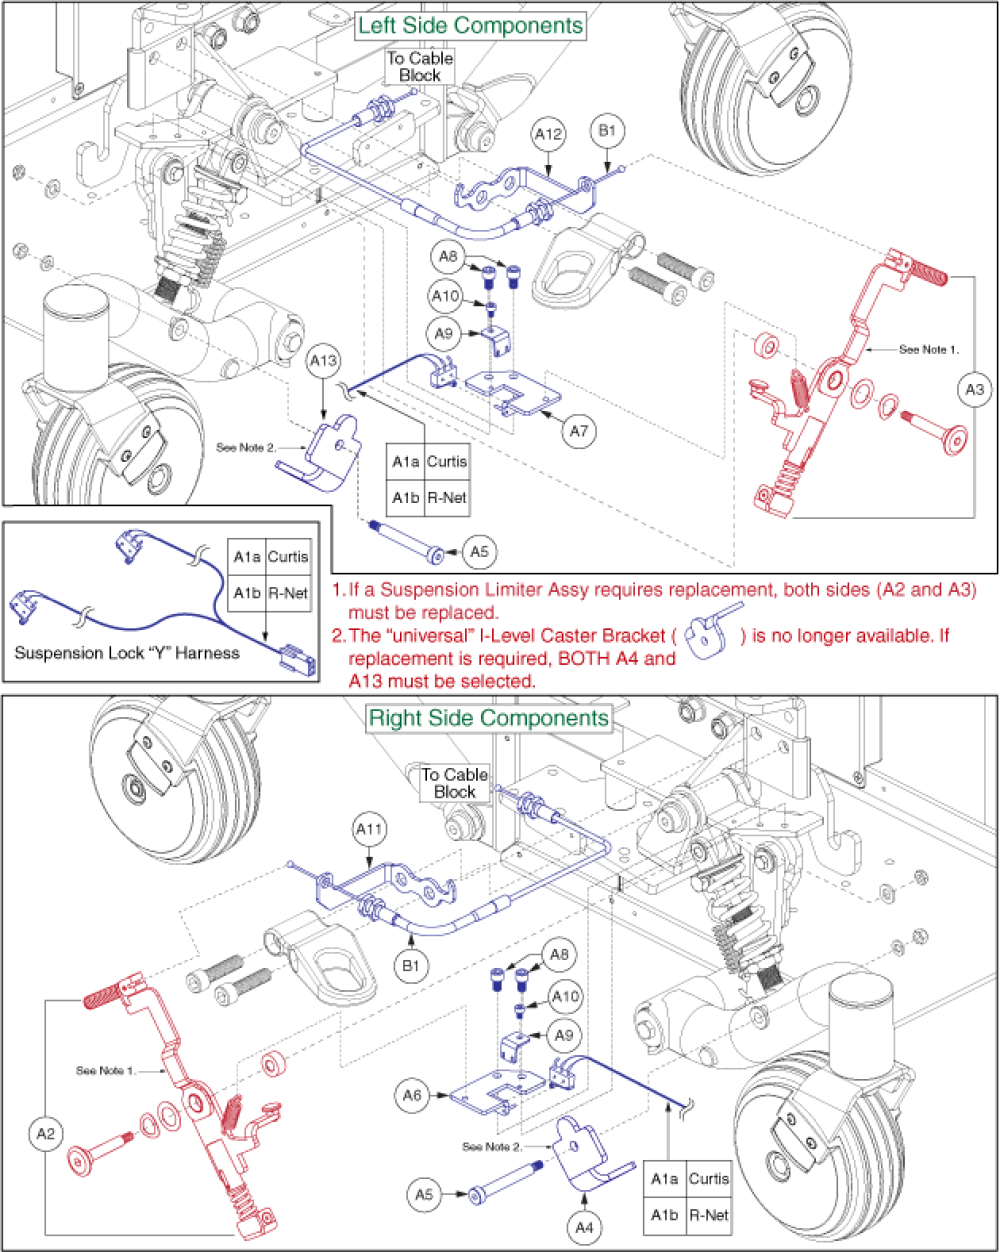 I-level Base Components - Edge Hd parts diagram